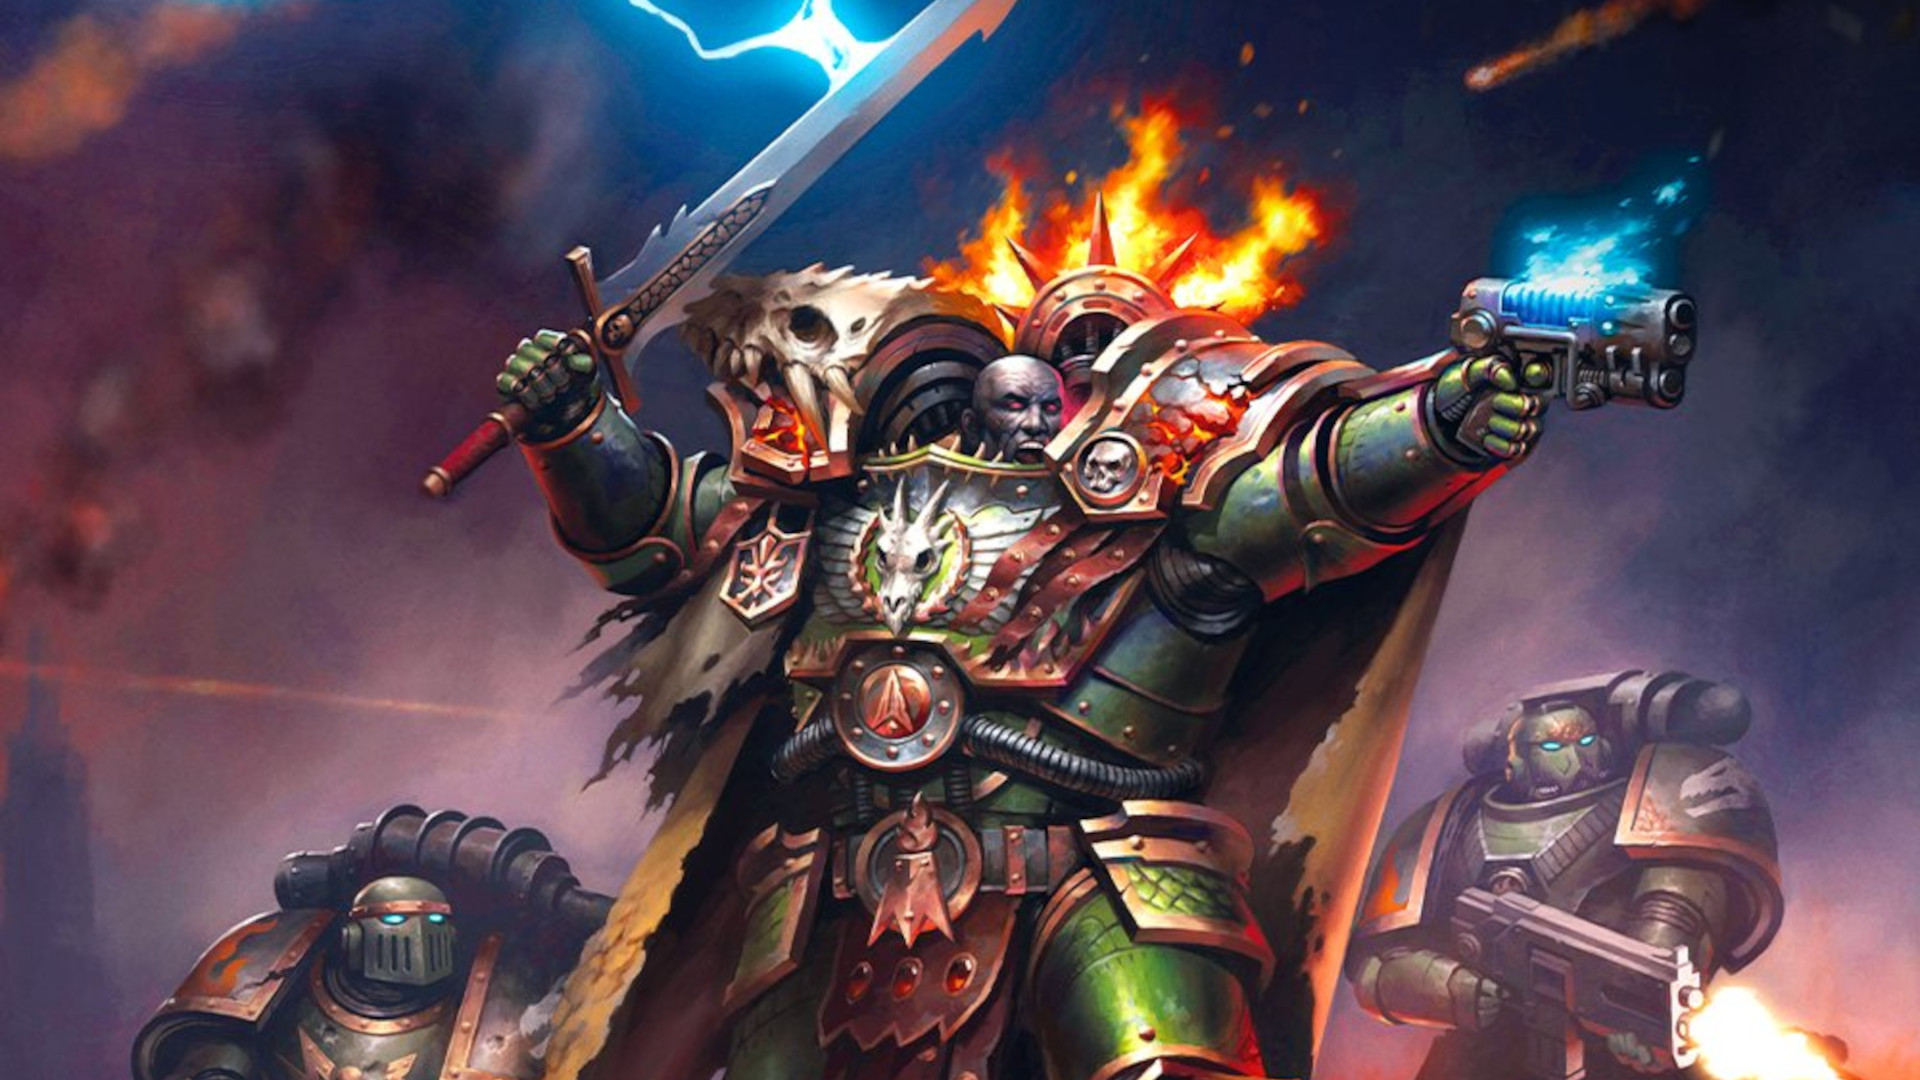 Warhammer 40k Salamanders – a brotherhood forged in battle